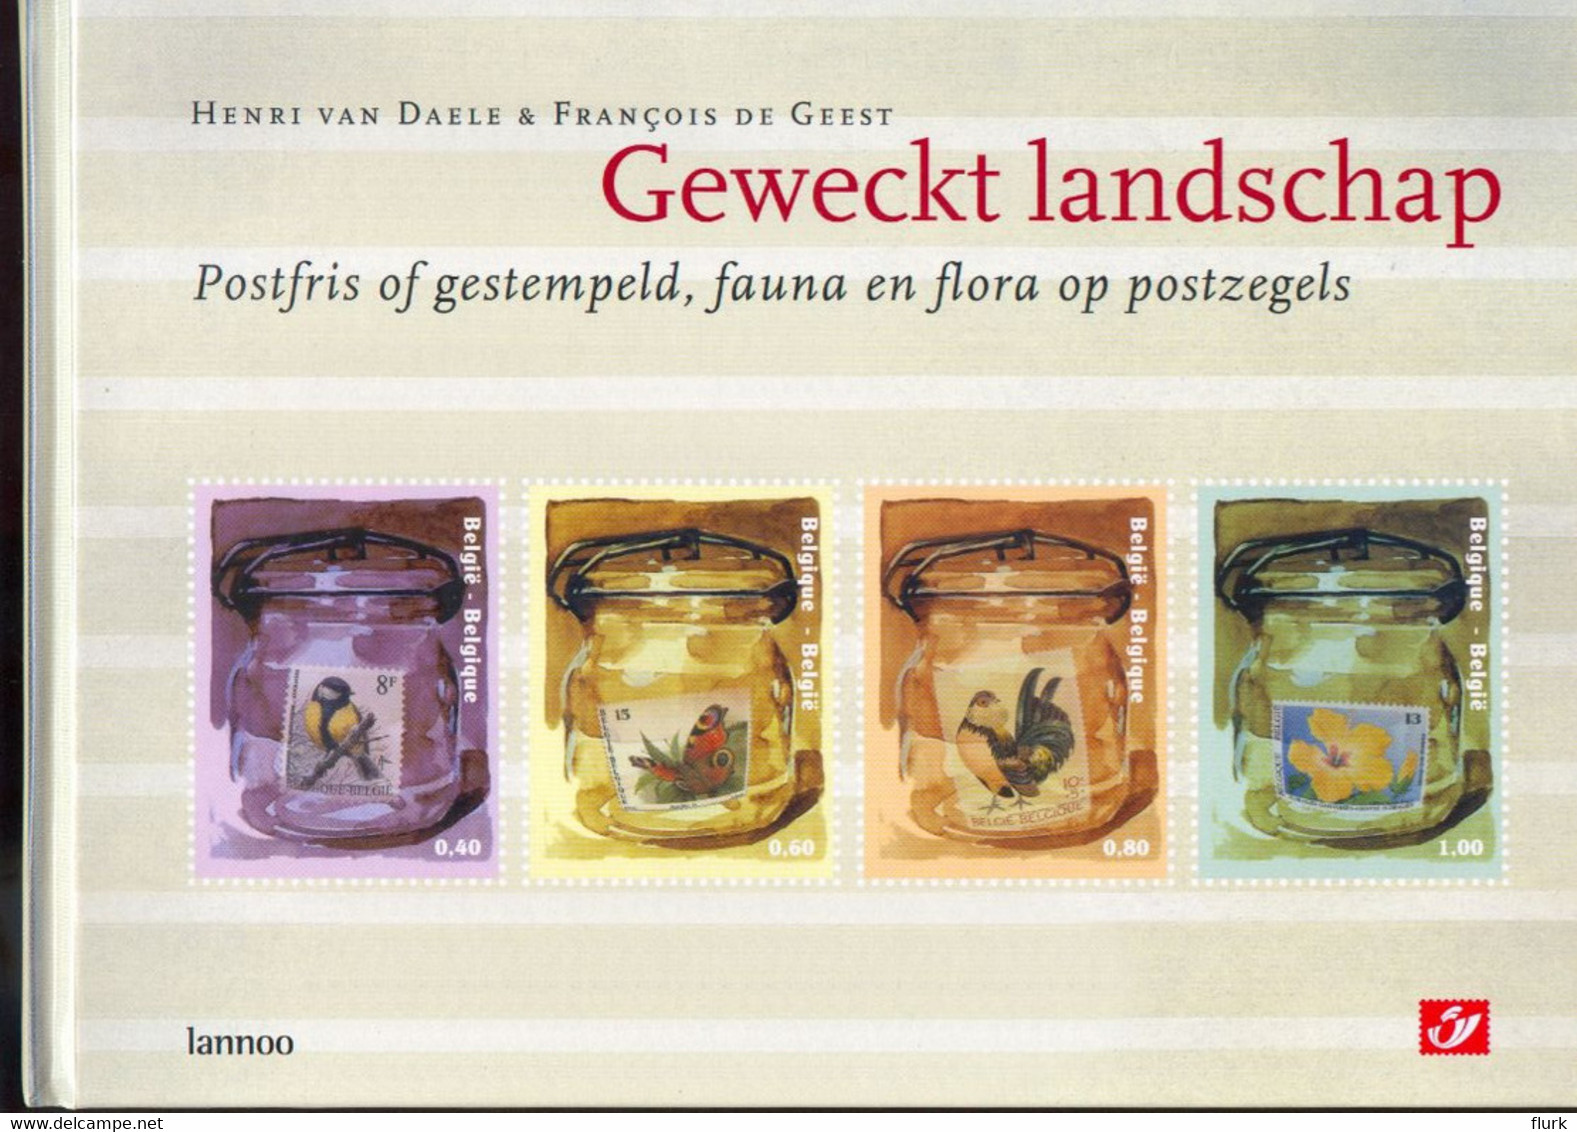 Geweckt Landschap Postfris Of Gestempeld, Fauna En Flora Op Postzegels Perfect - Thema's